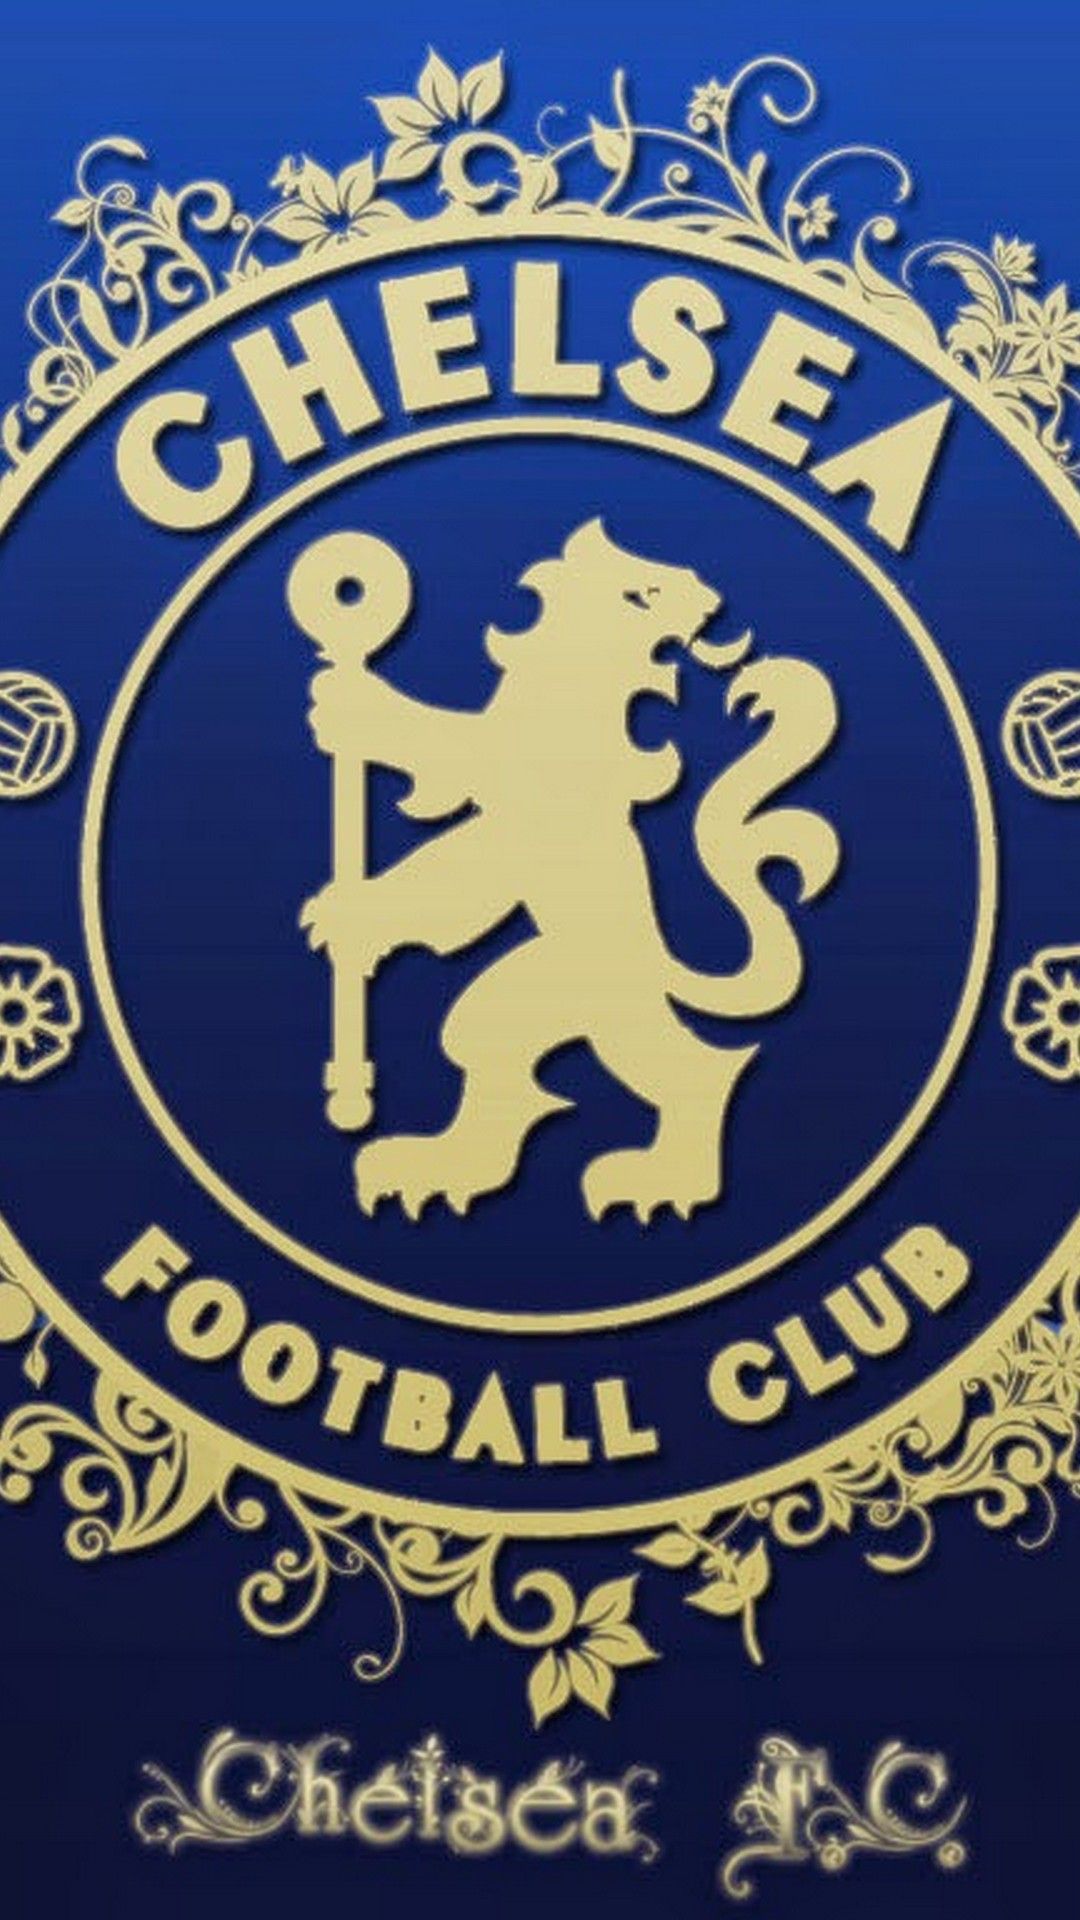 Chelsea Football Club iPhone Wallpaper. Best Wallpaper HD. Chelsea football club wallpaper, Chelsea football club, Chelsea football